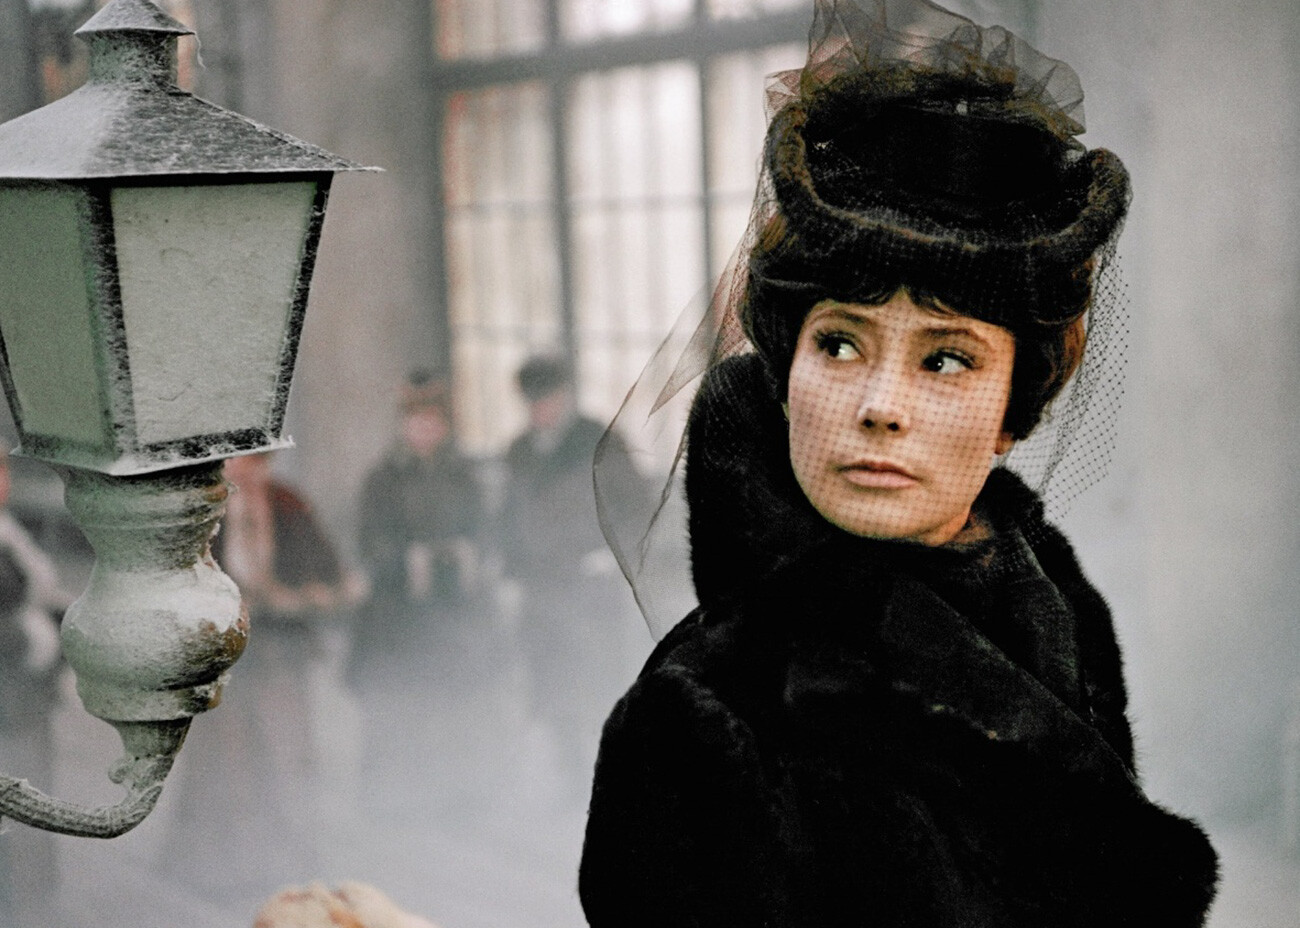 Fermo immagine dal film sovietico del 1967 “Anna Karenina”. La protagonista era interpretata da Tatjana Samojlova